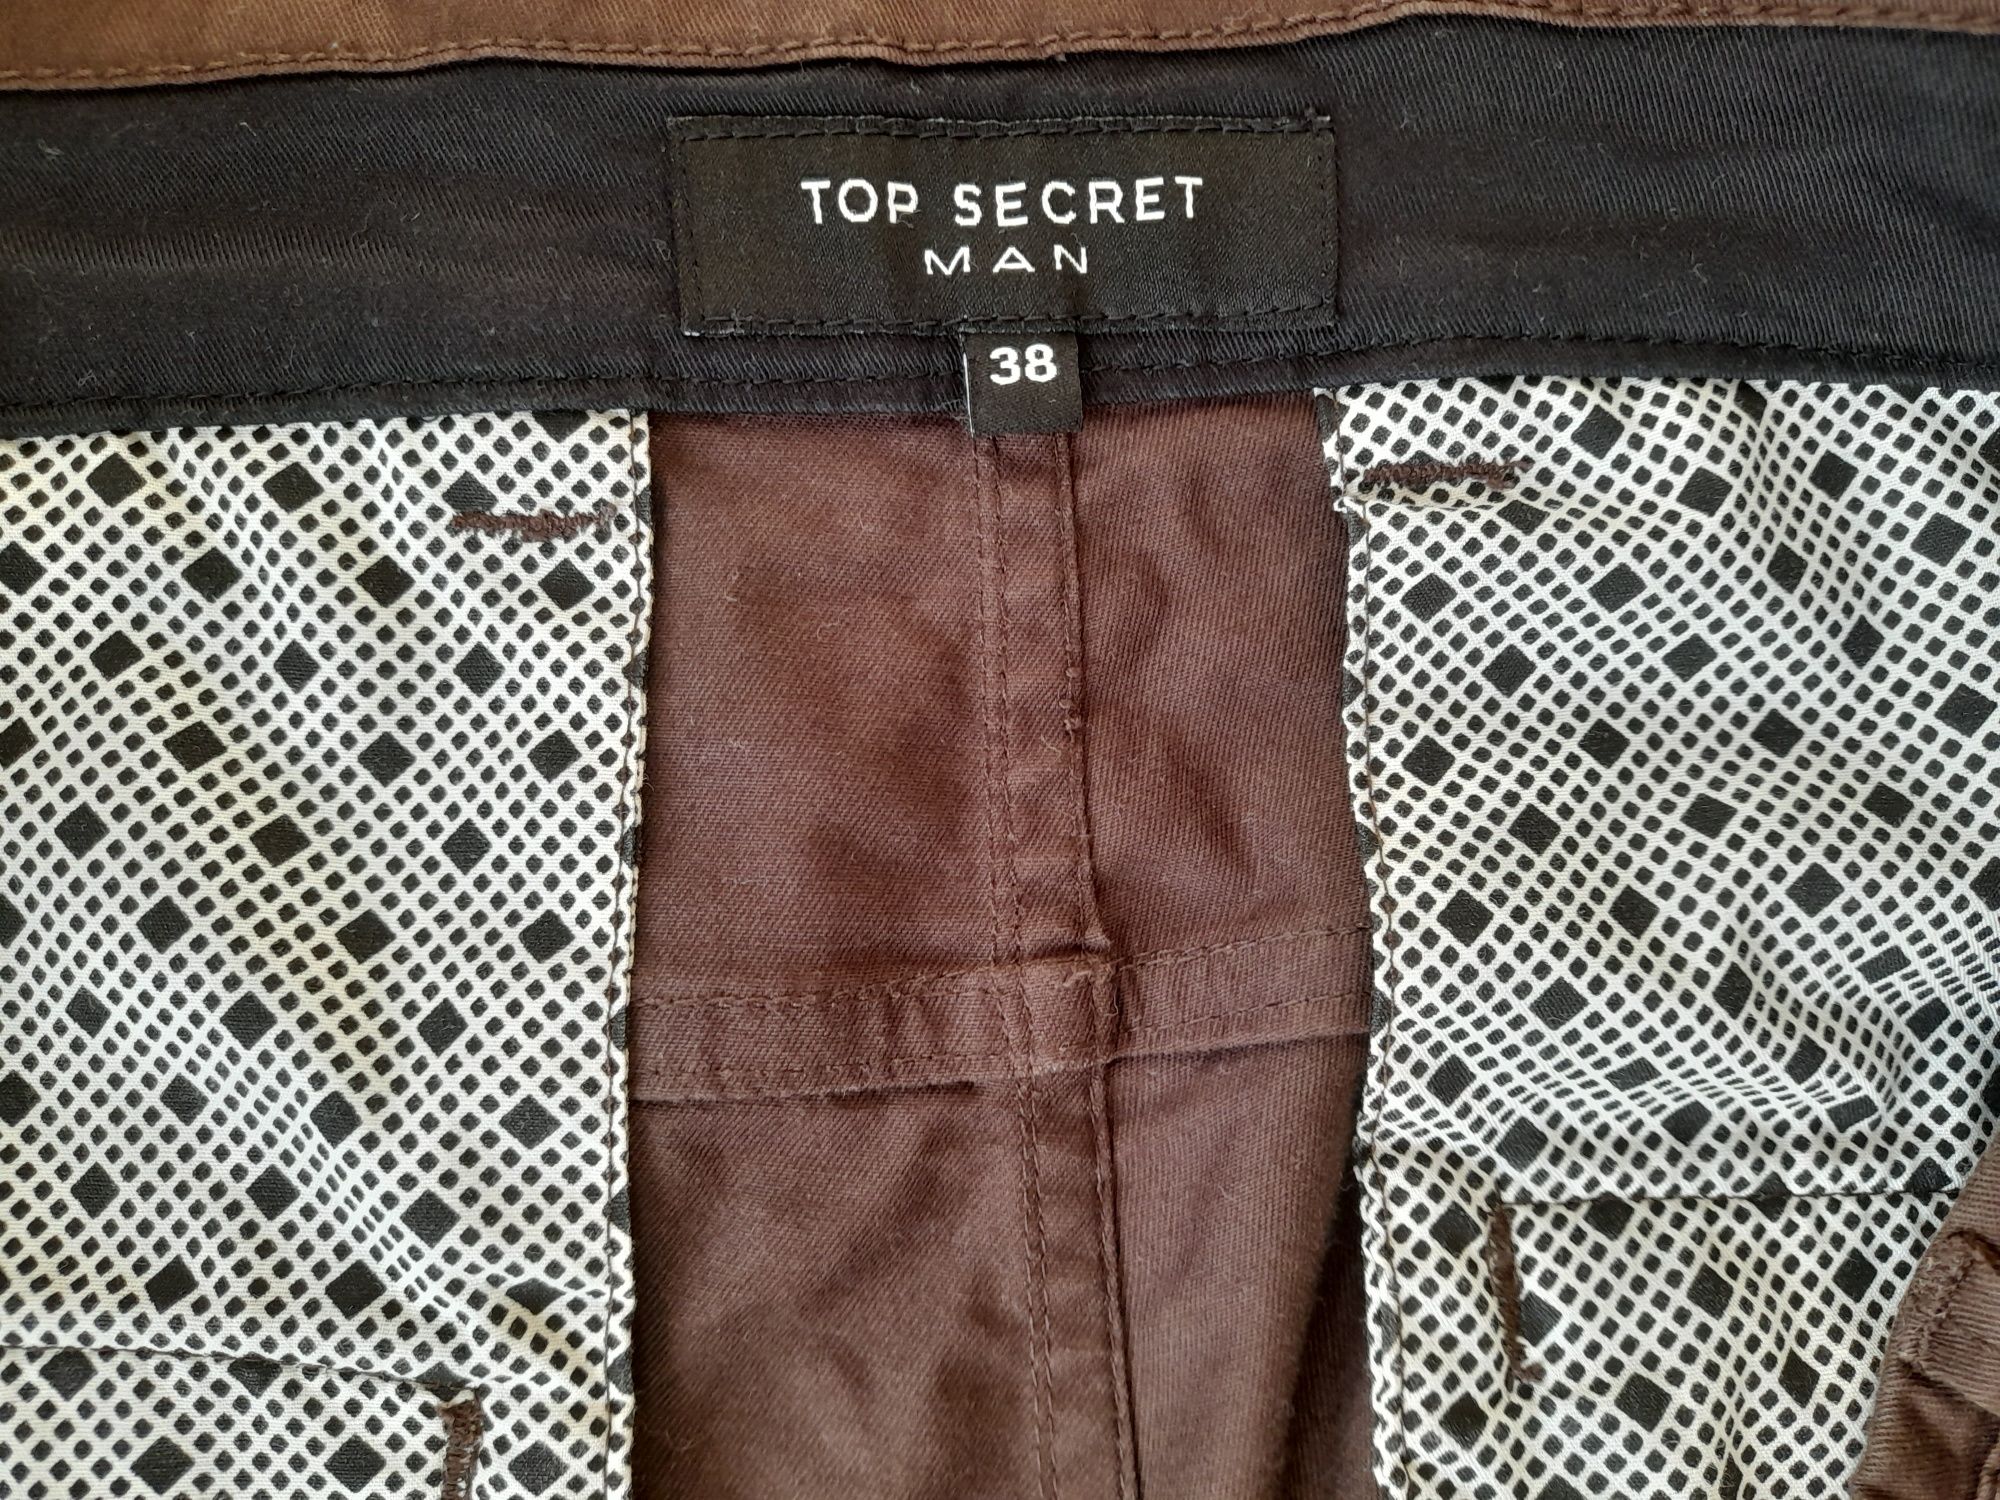 Spodnie męskie Top Secret rozmiar 38